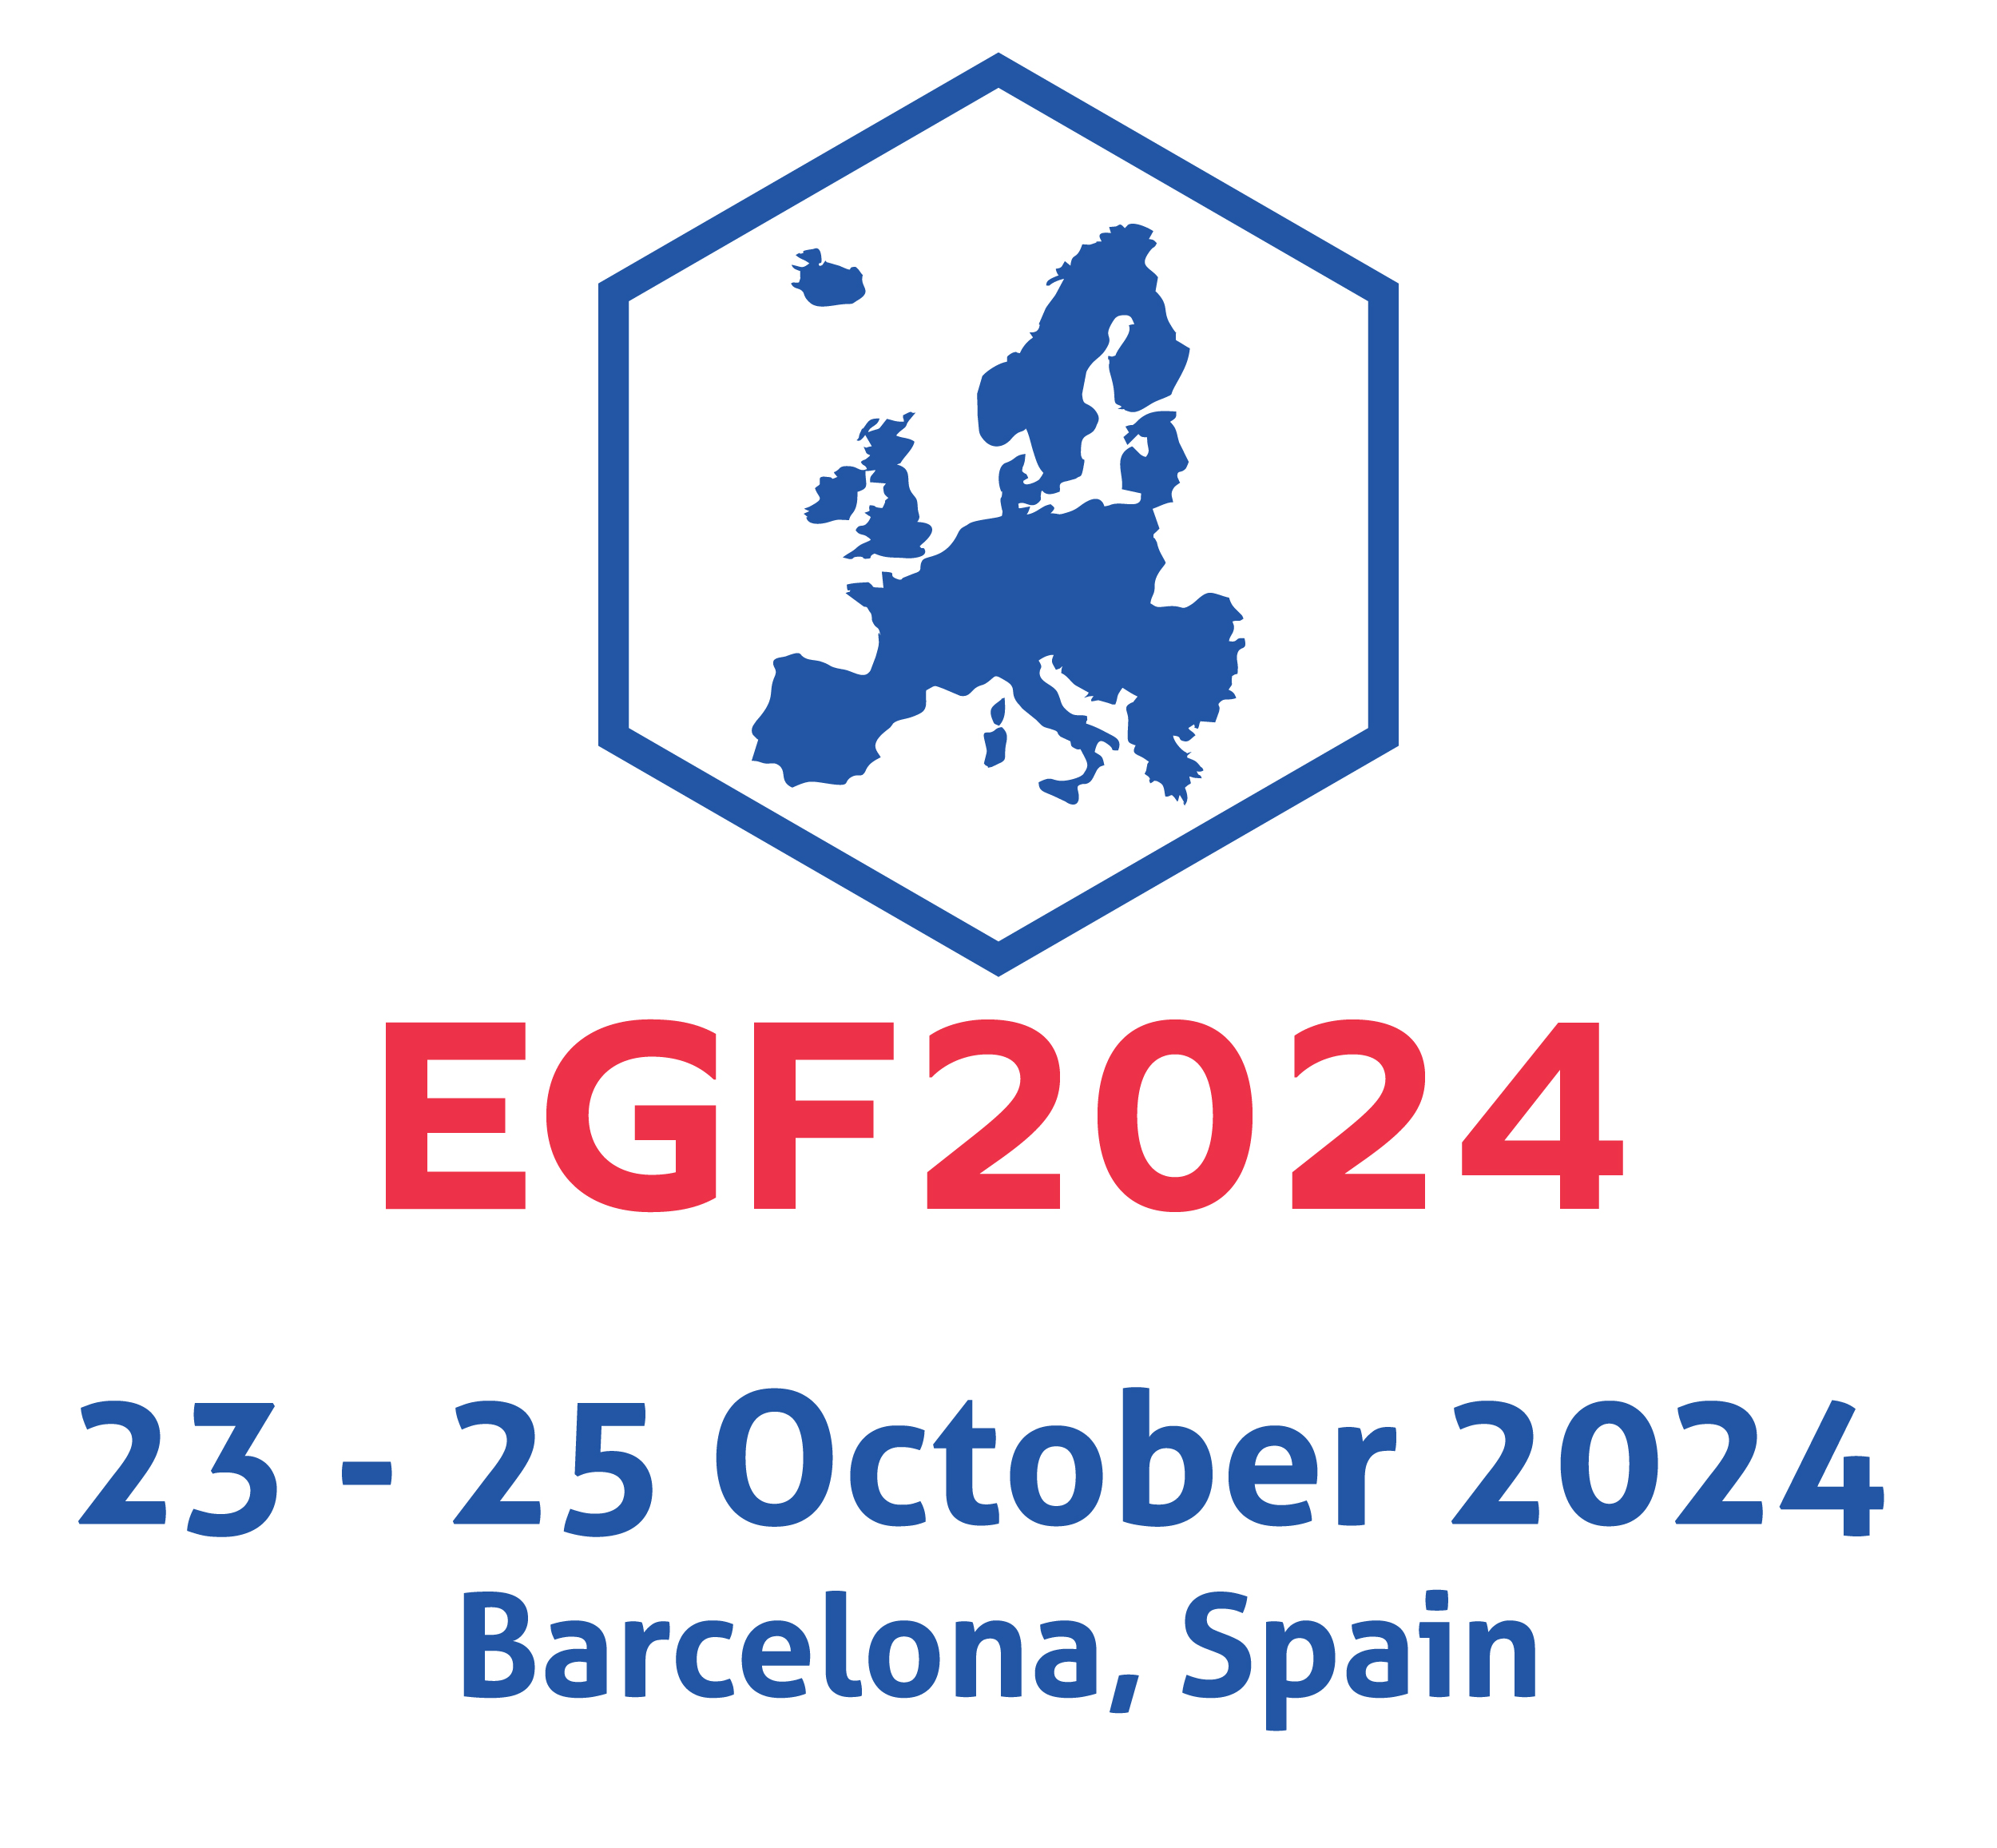 The 9th Ed. of the European Graphene Forum - EGF 2024